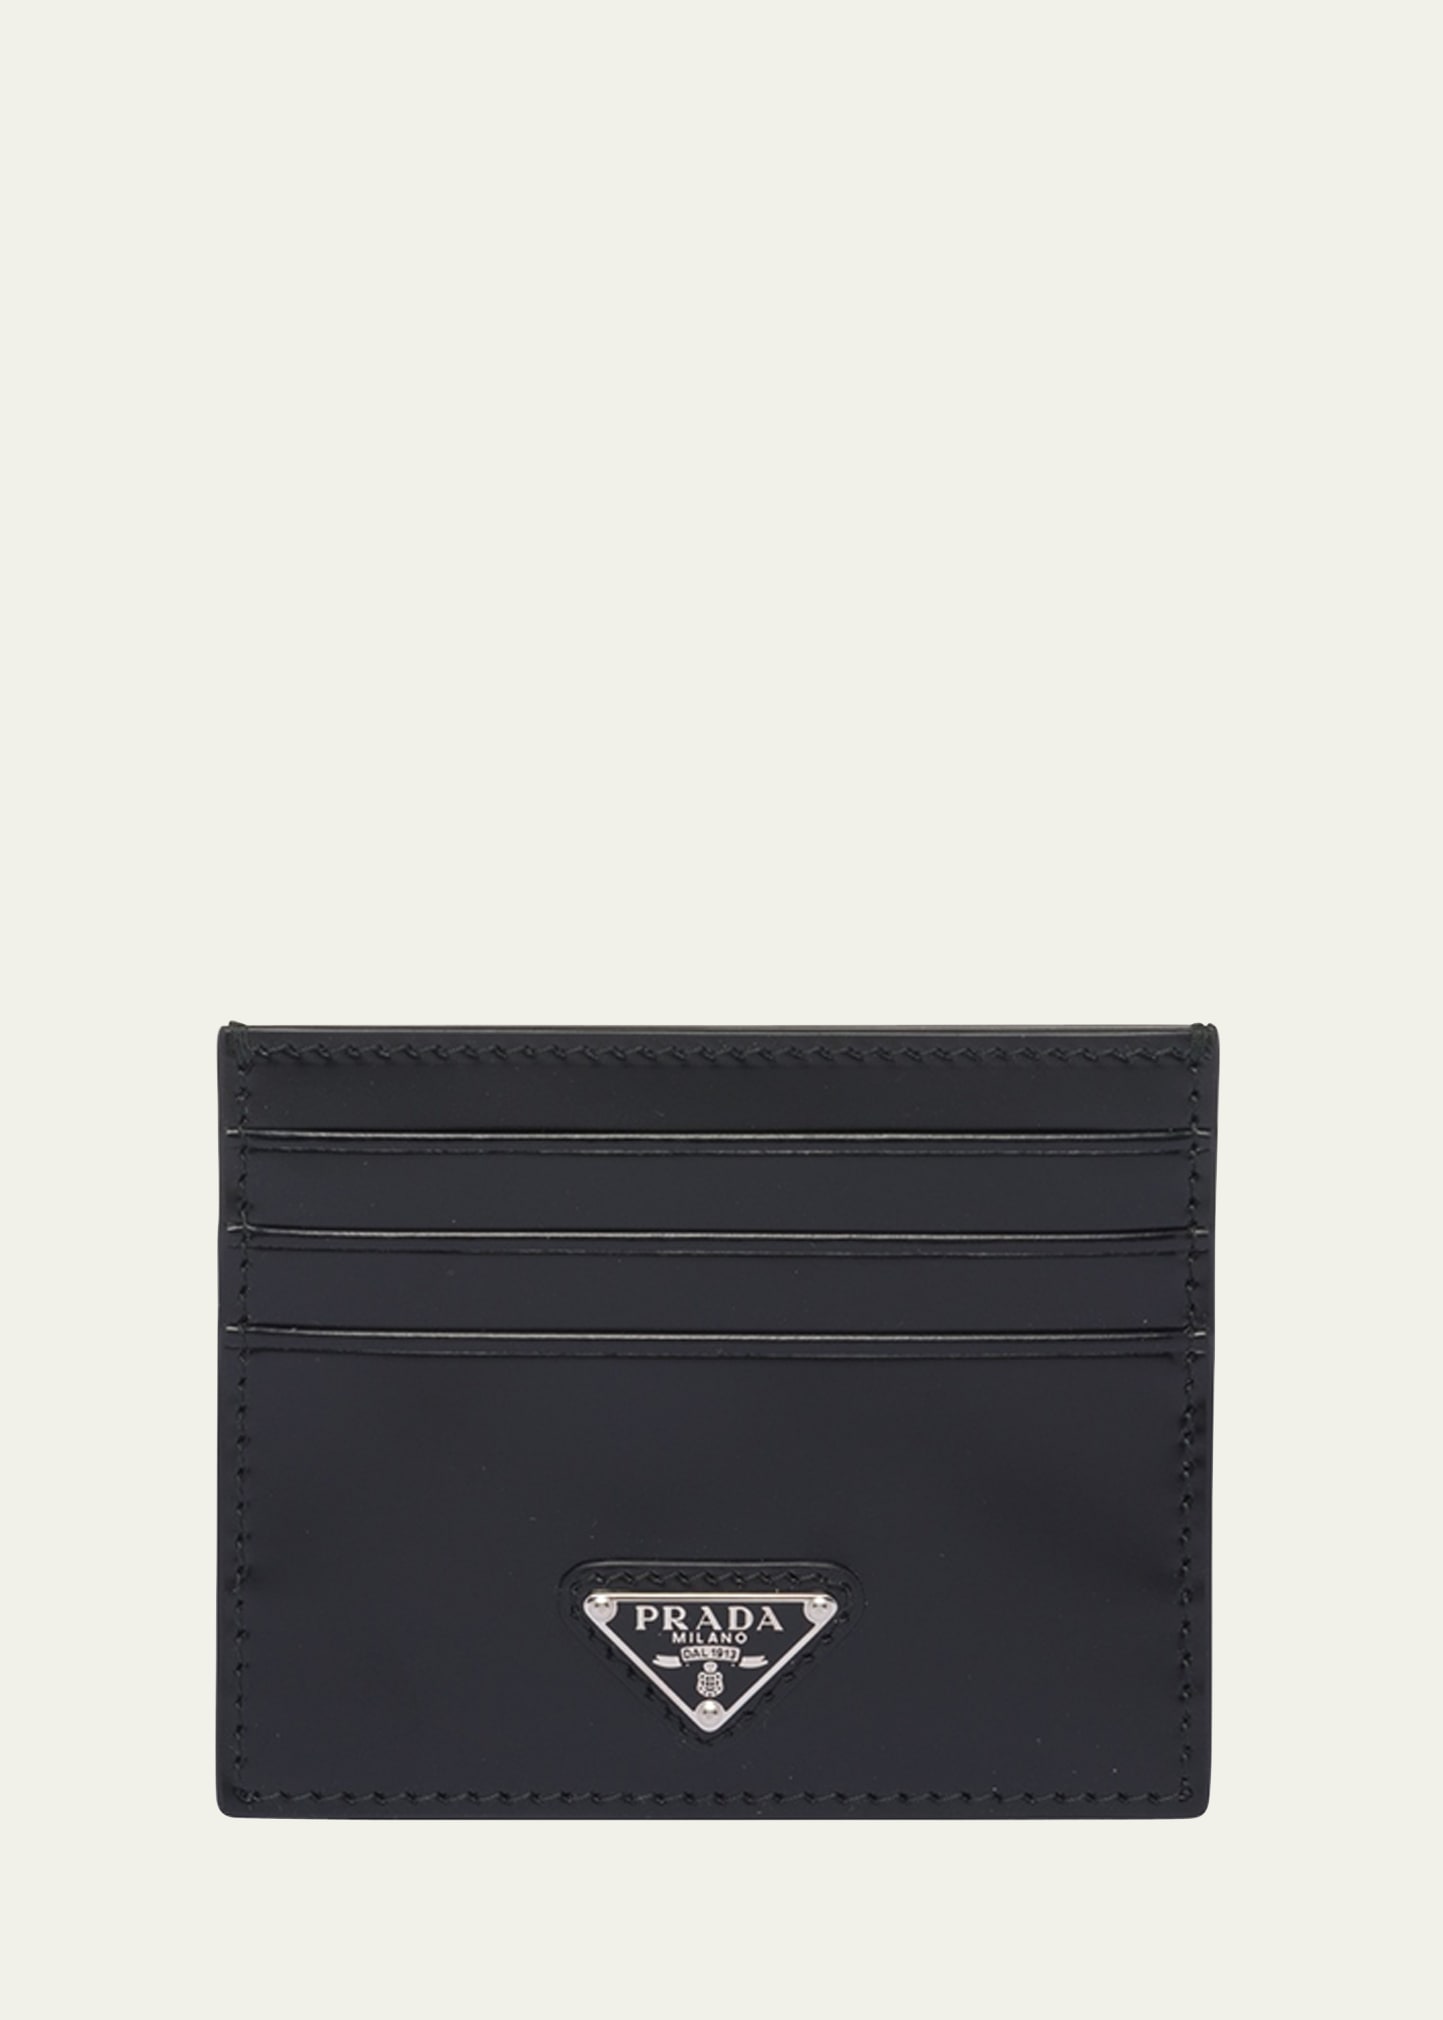 PRADA Saffiano Metal Card Holder Compact Wallet Black 1311577